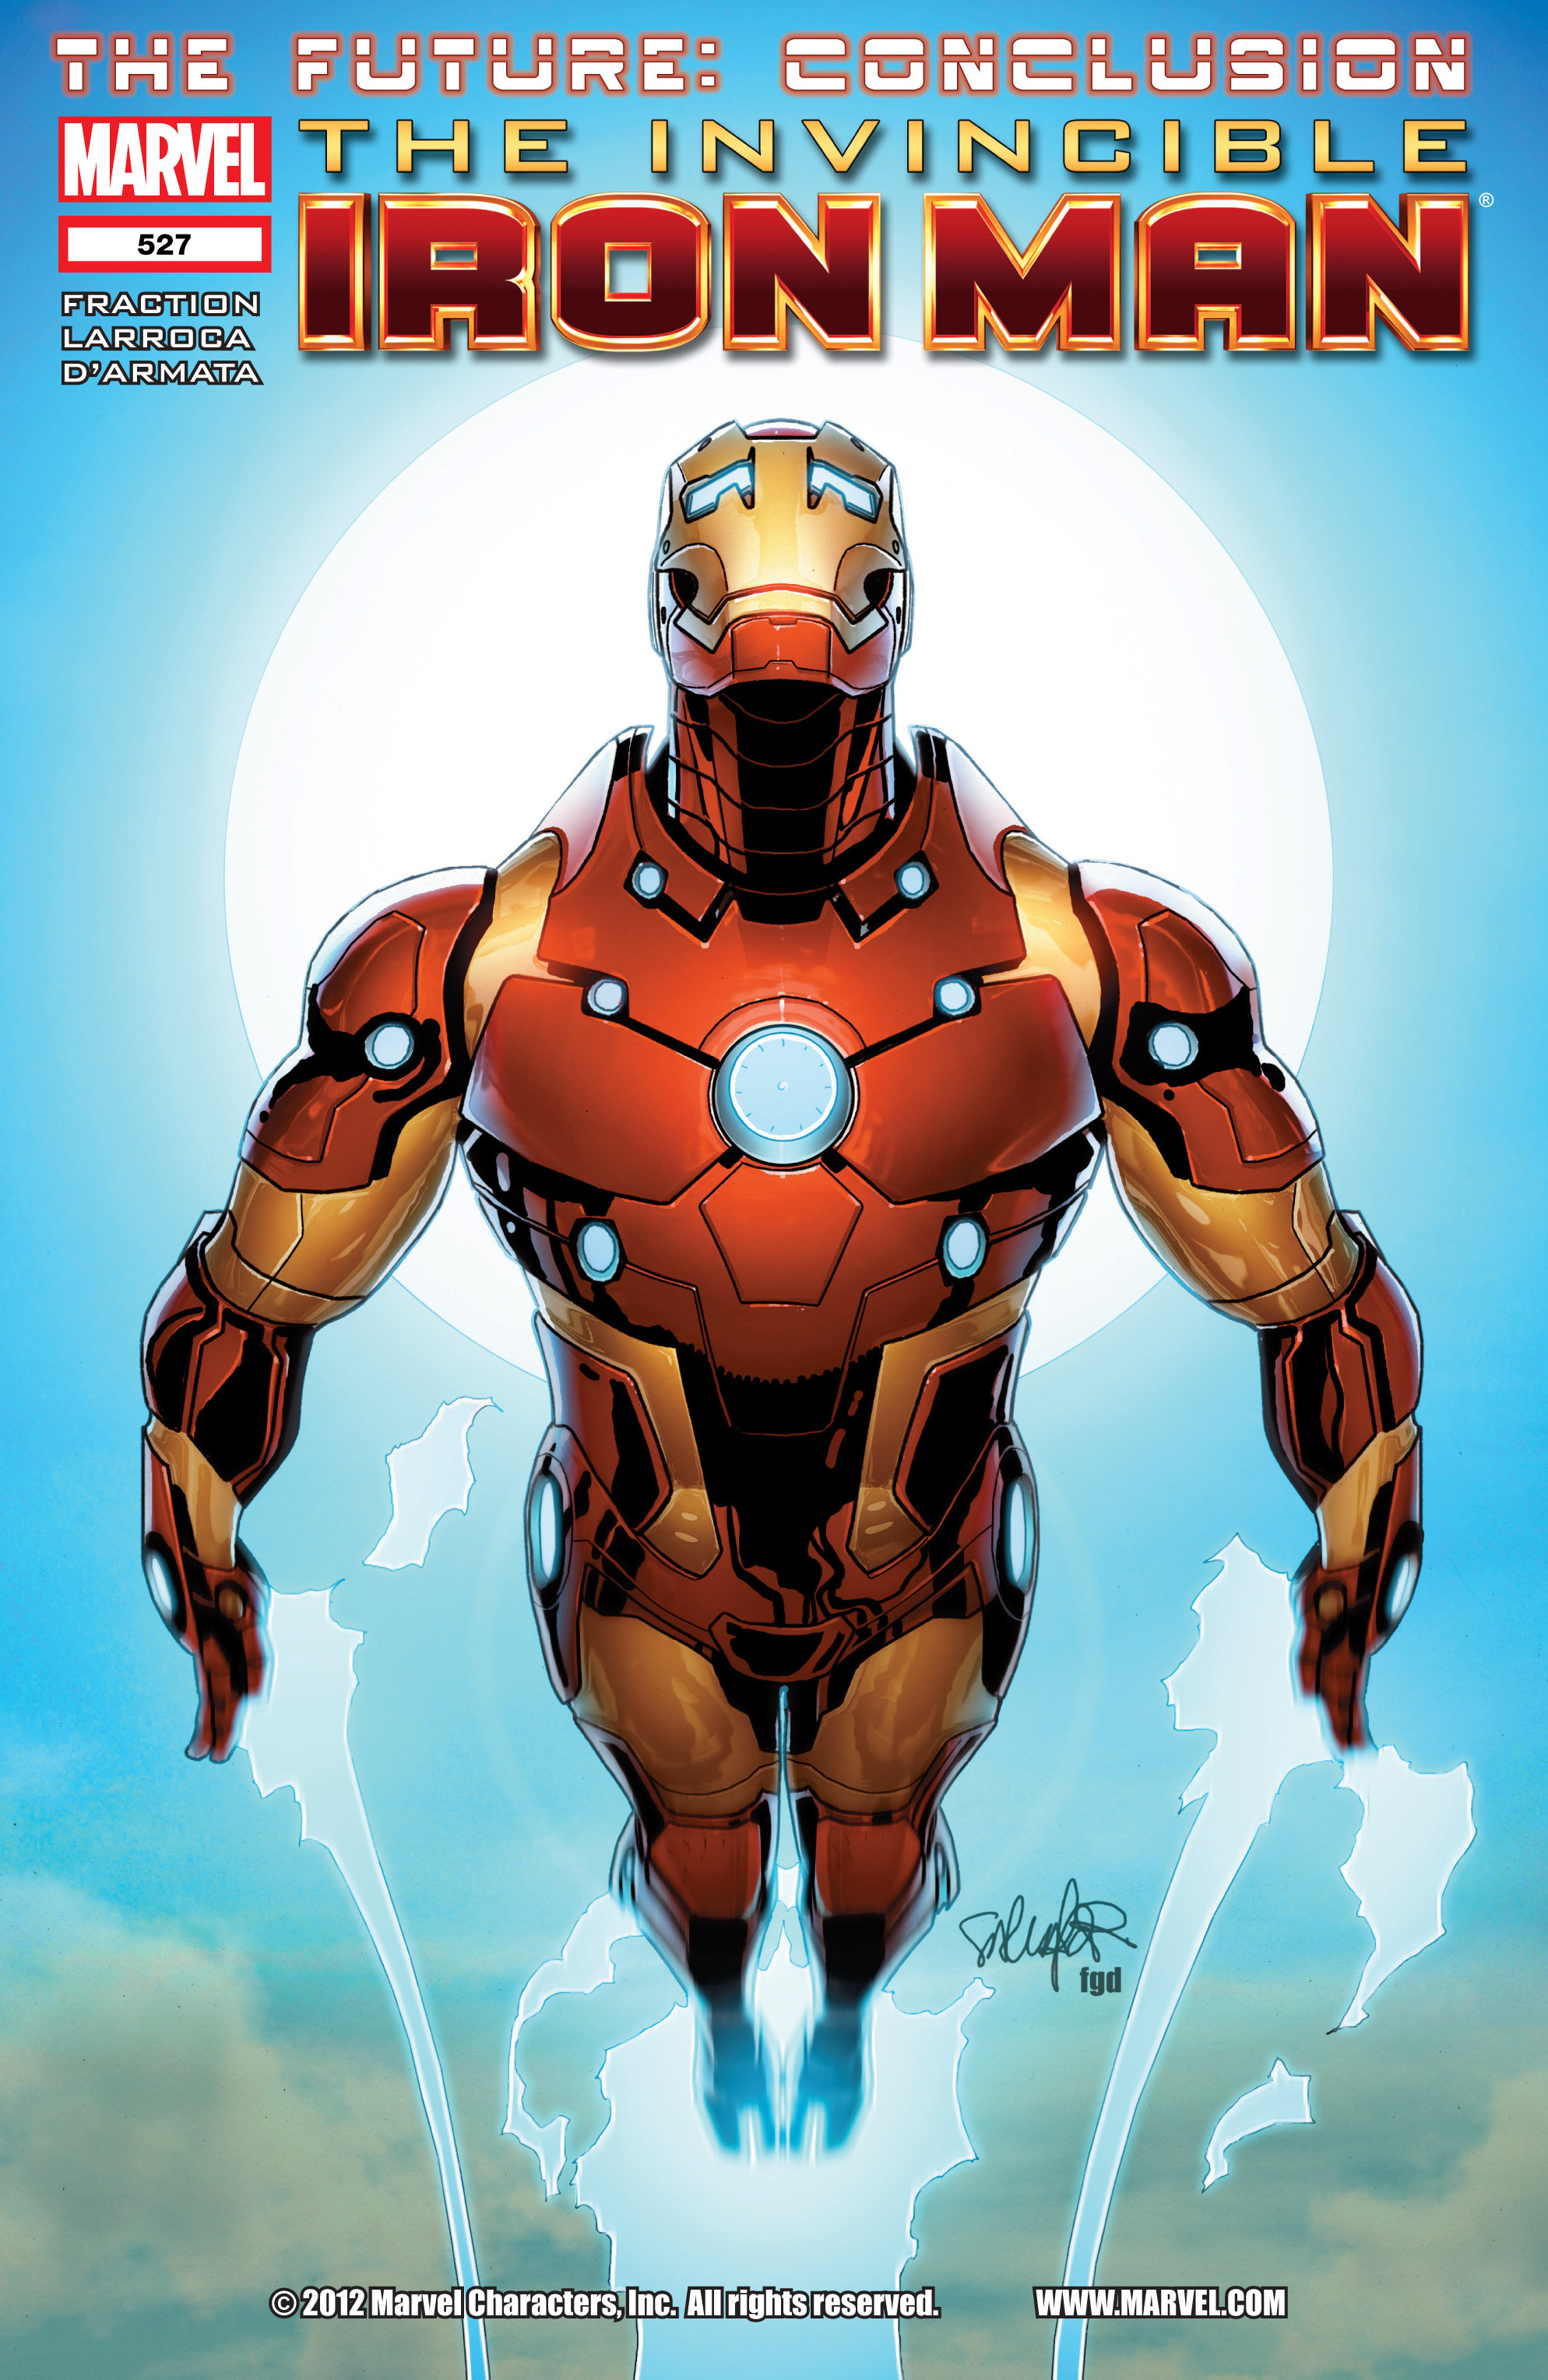 Iron man comics pdf free download the atkins diet book free download